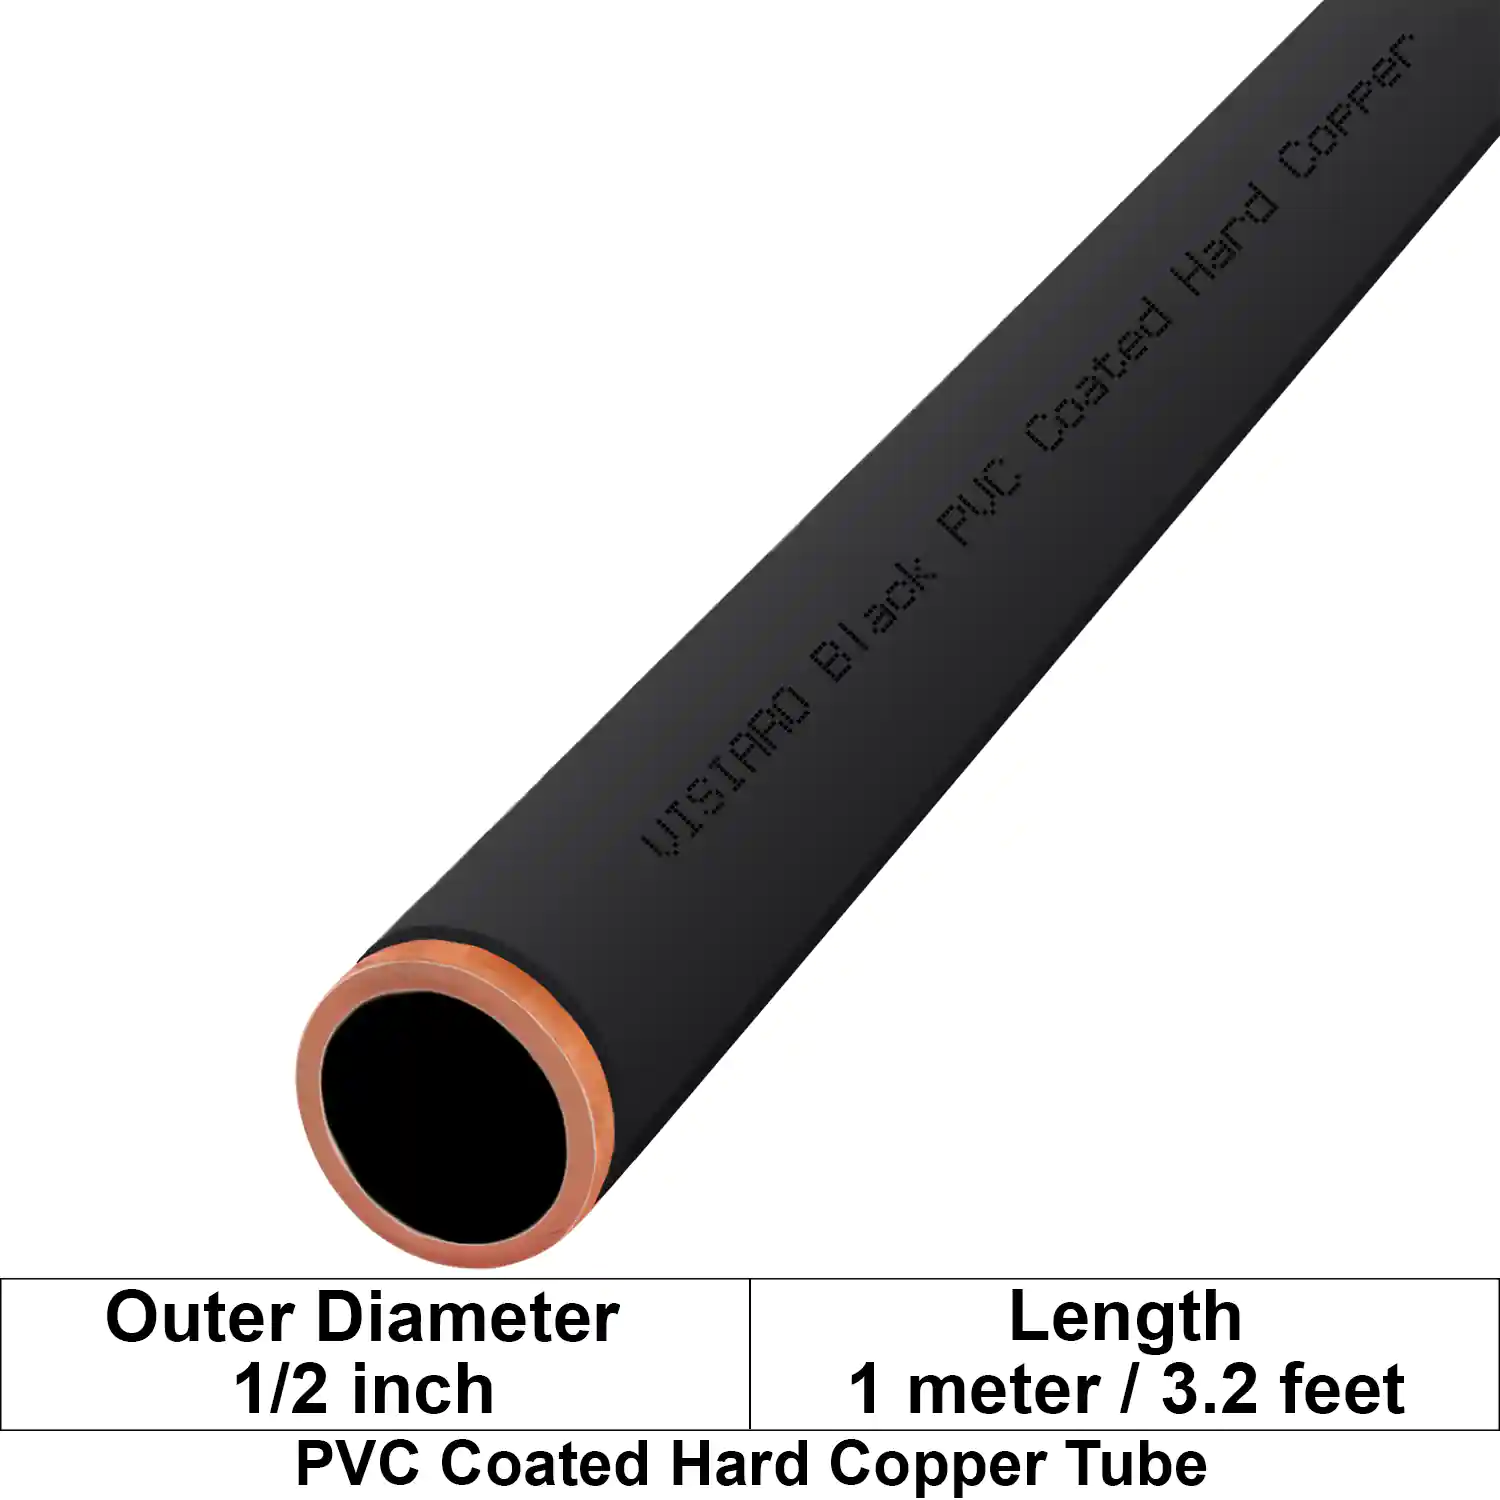 Visiaro Black PVC Coated Hard Copper Tube 1mtr long Outer Diameter - 1/2 inch